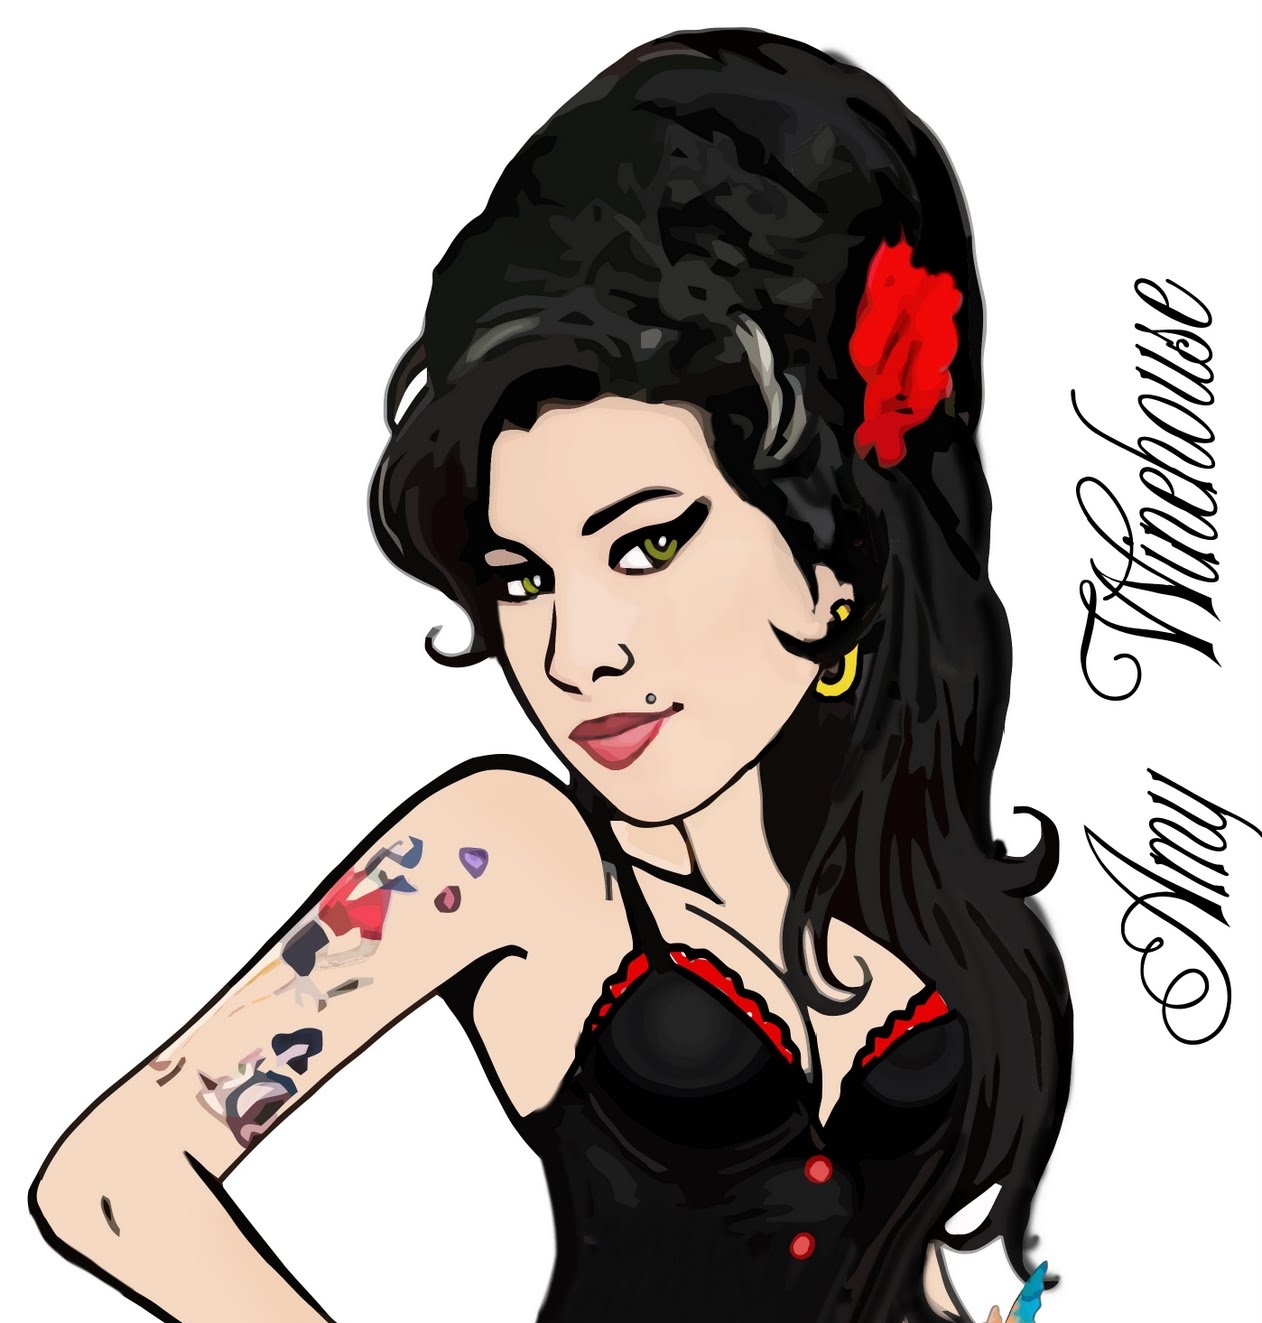 http://1.bp.blogspot.com/-CcVpo2Y4qPQ/Tv-Jkfg4INI/AAAAAAAAANA/Kn4-WI67Cmo/s1600/Caricatura+Amy+Winehouse.jpg